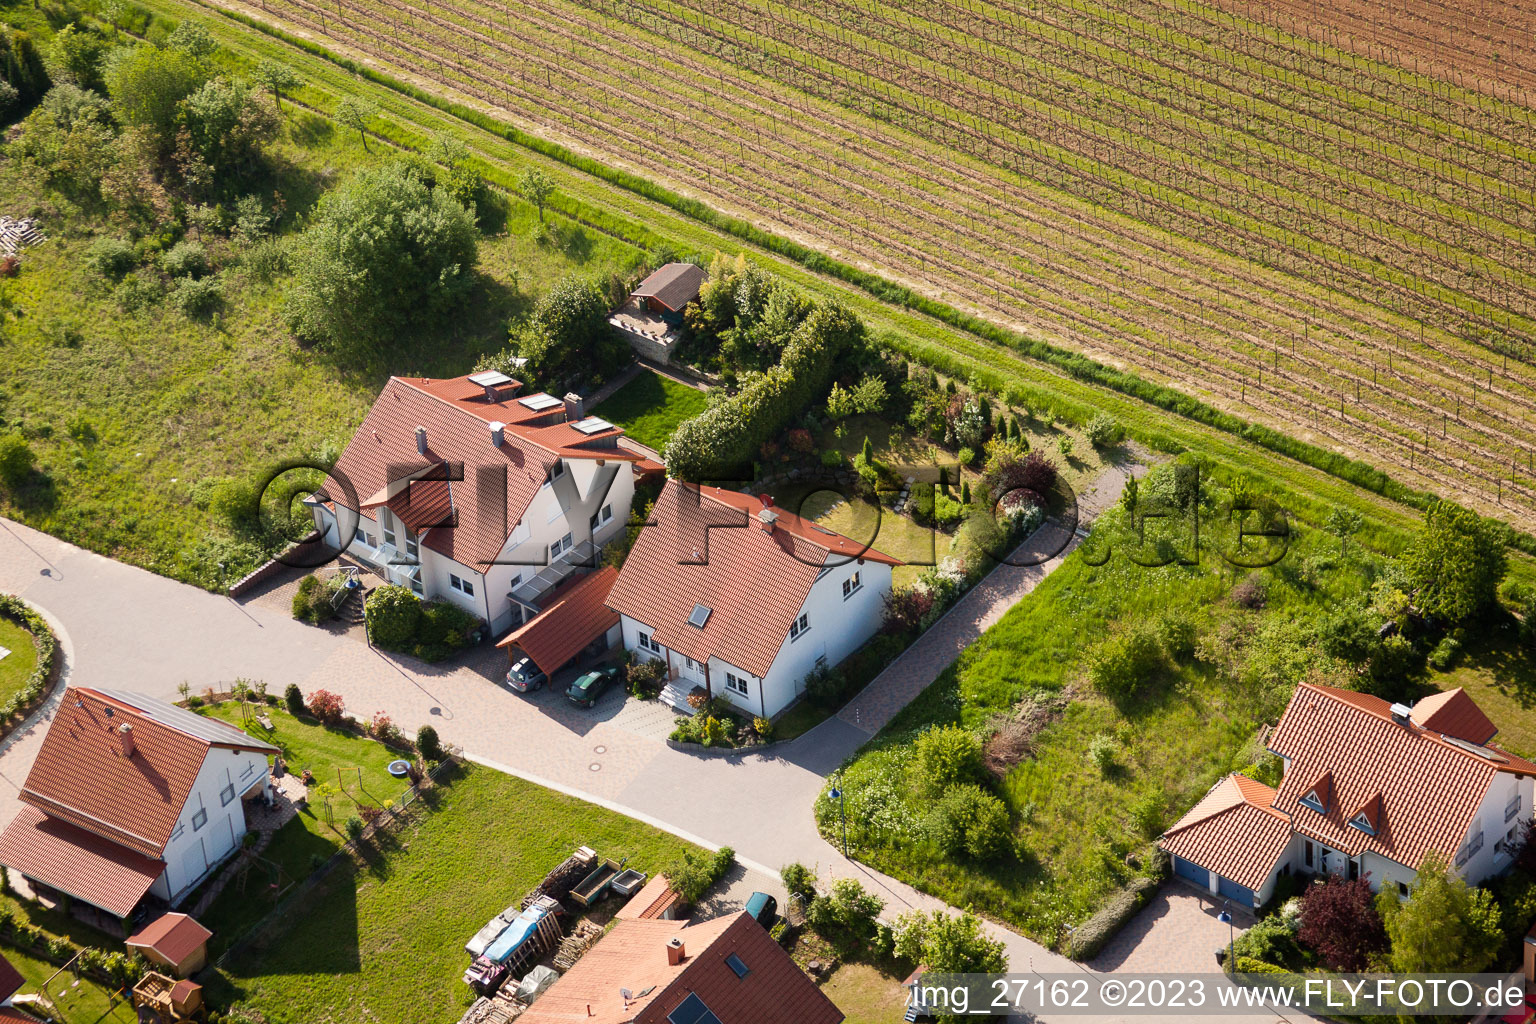 District Mörzheim in Landau in der Pfalz in the state Rhineland-Palatinate, Germany from the drone perspective